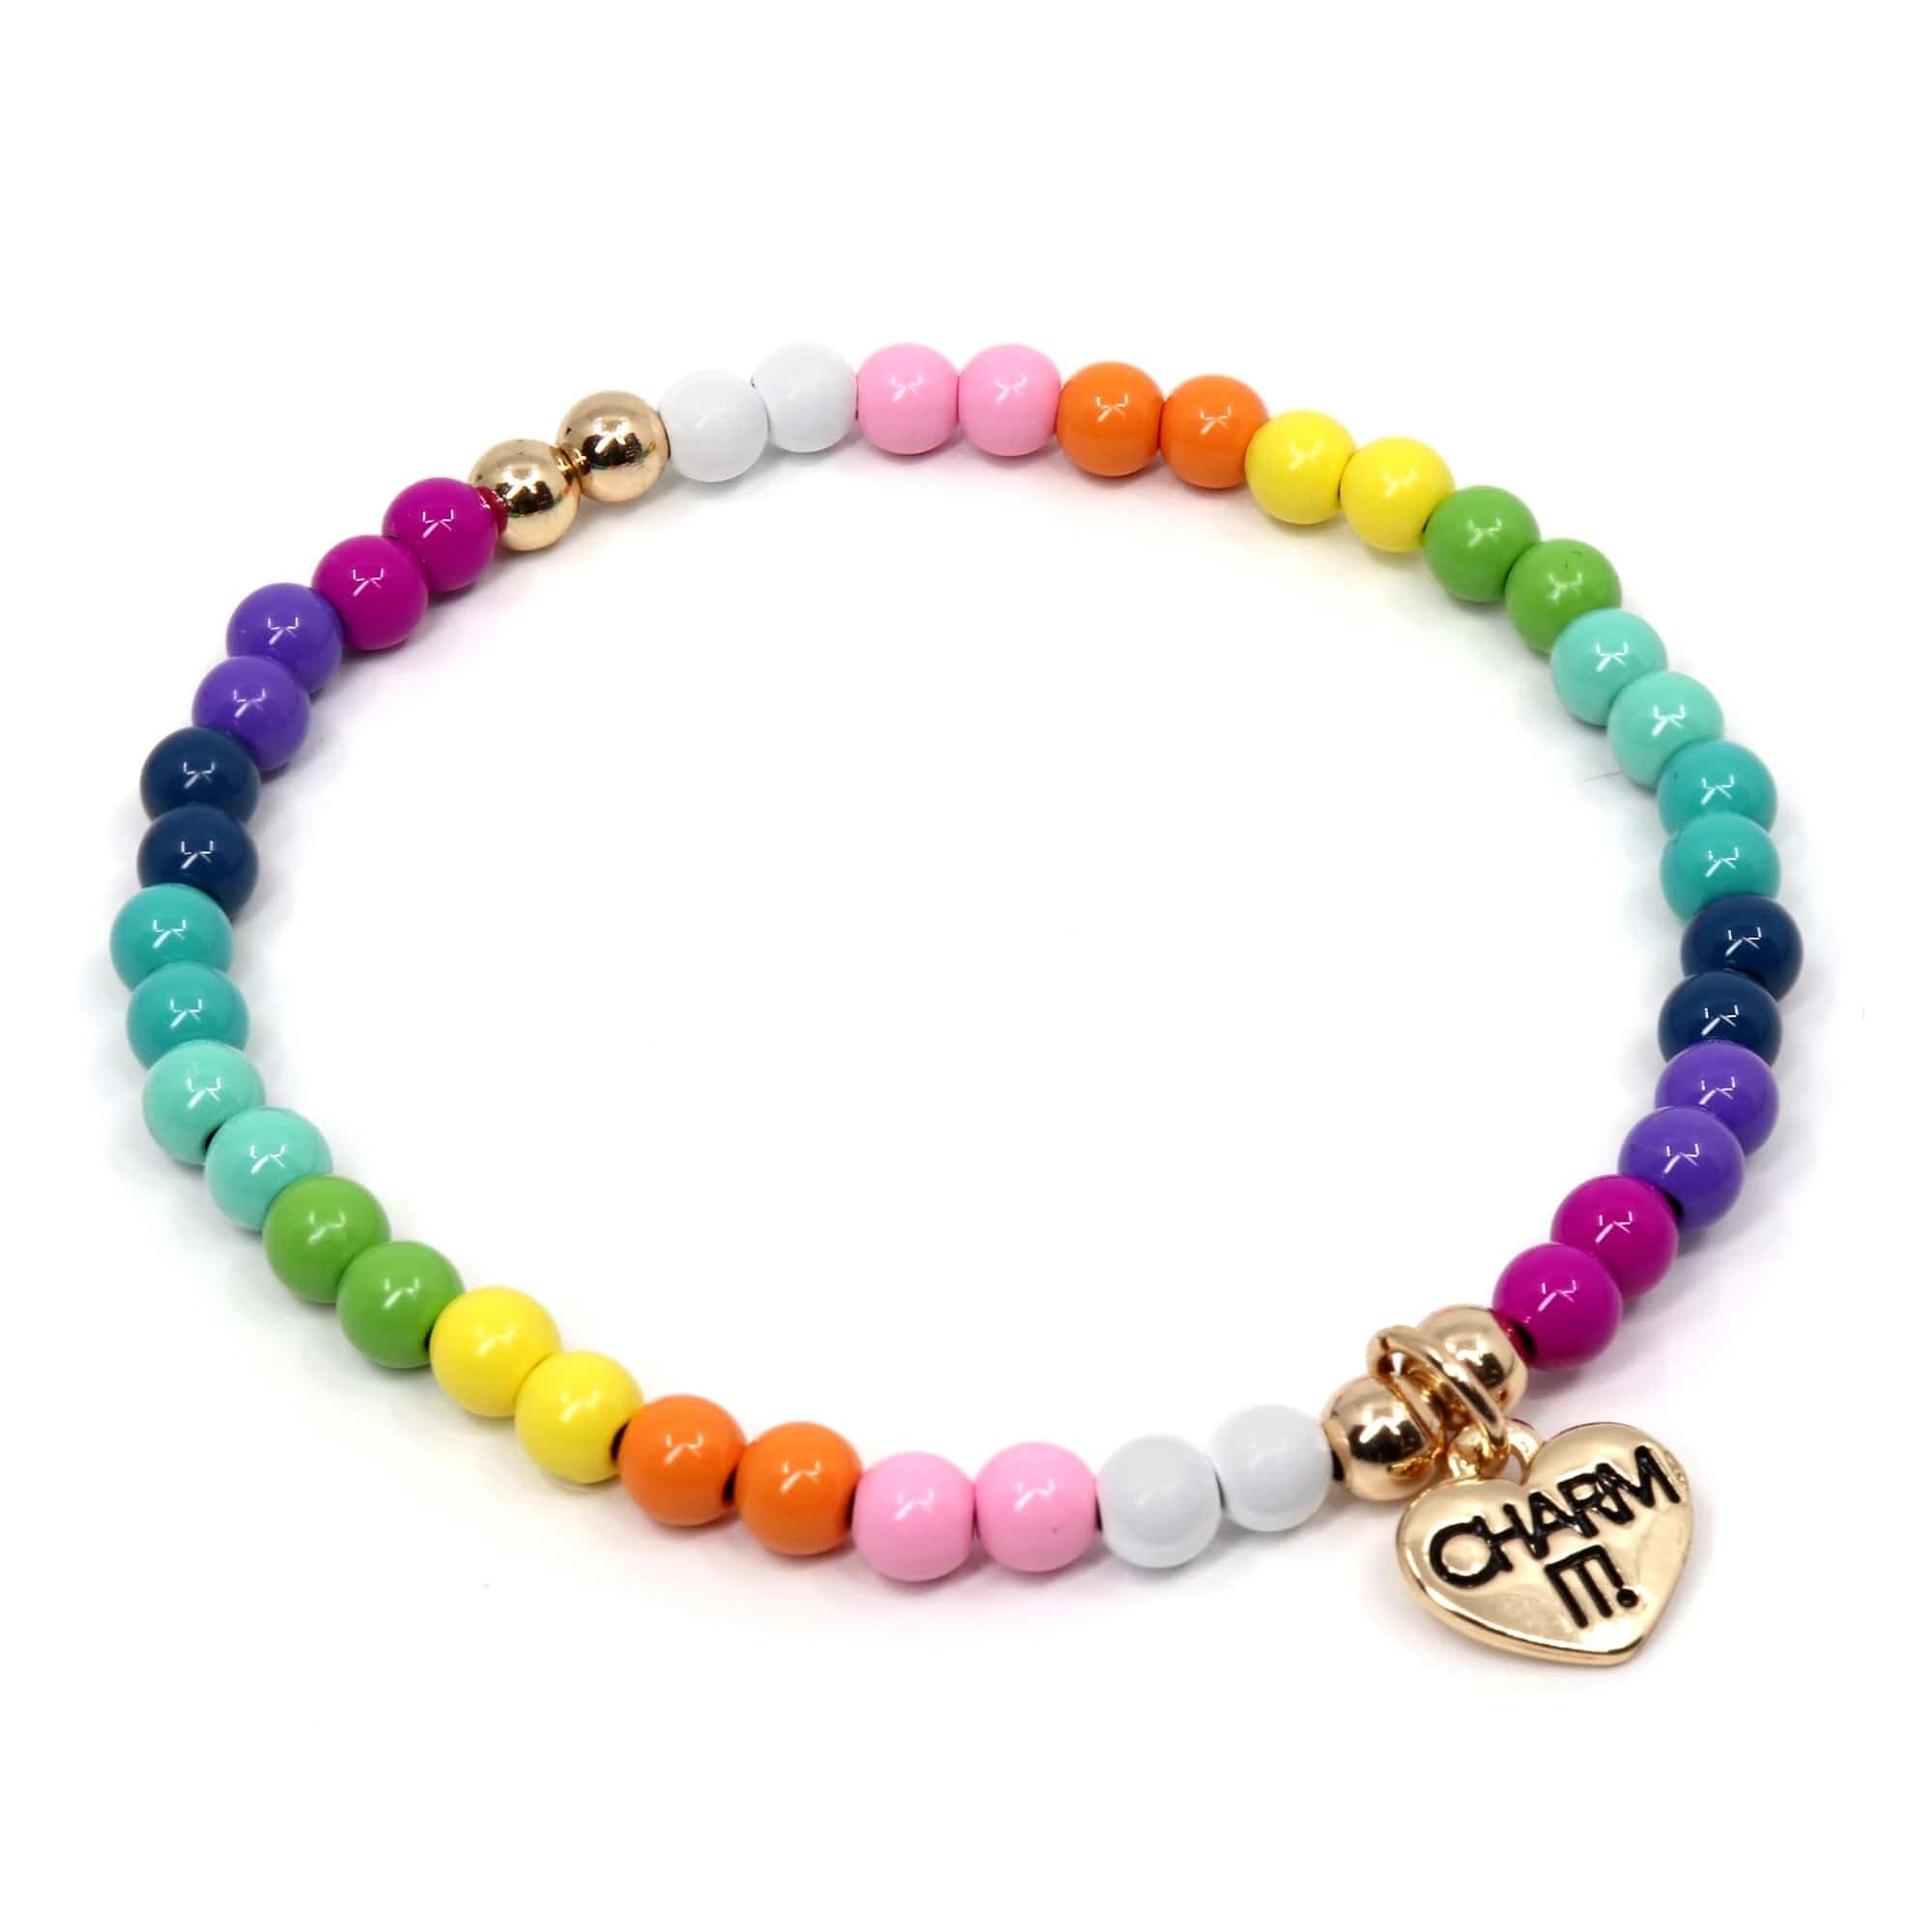 Charm It Gold Rainbow Stretch Bead Bracelet Kawaii Gifts 794187085072